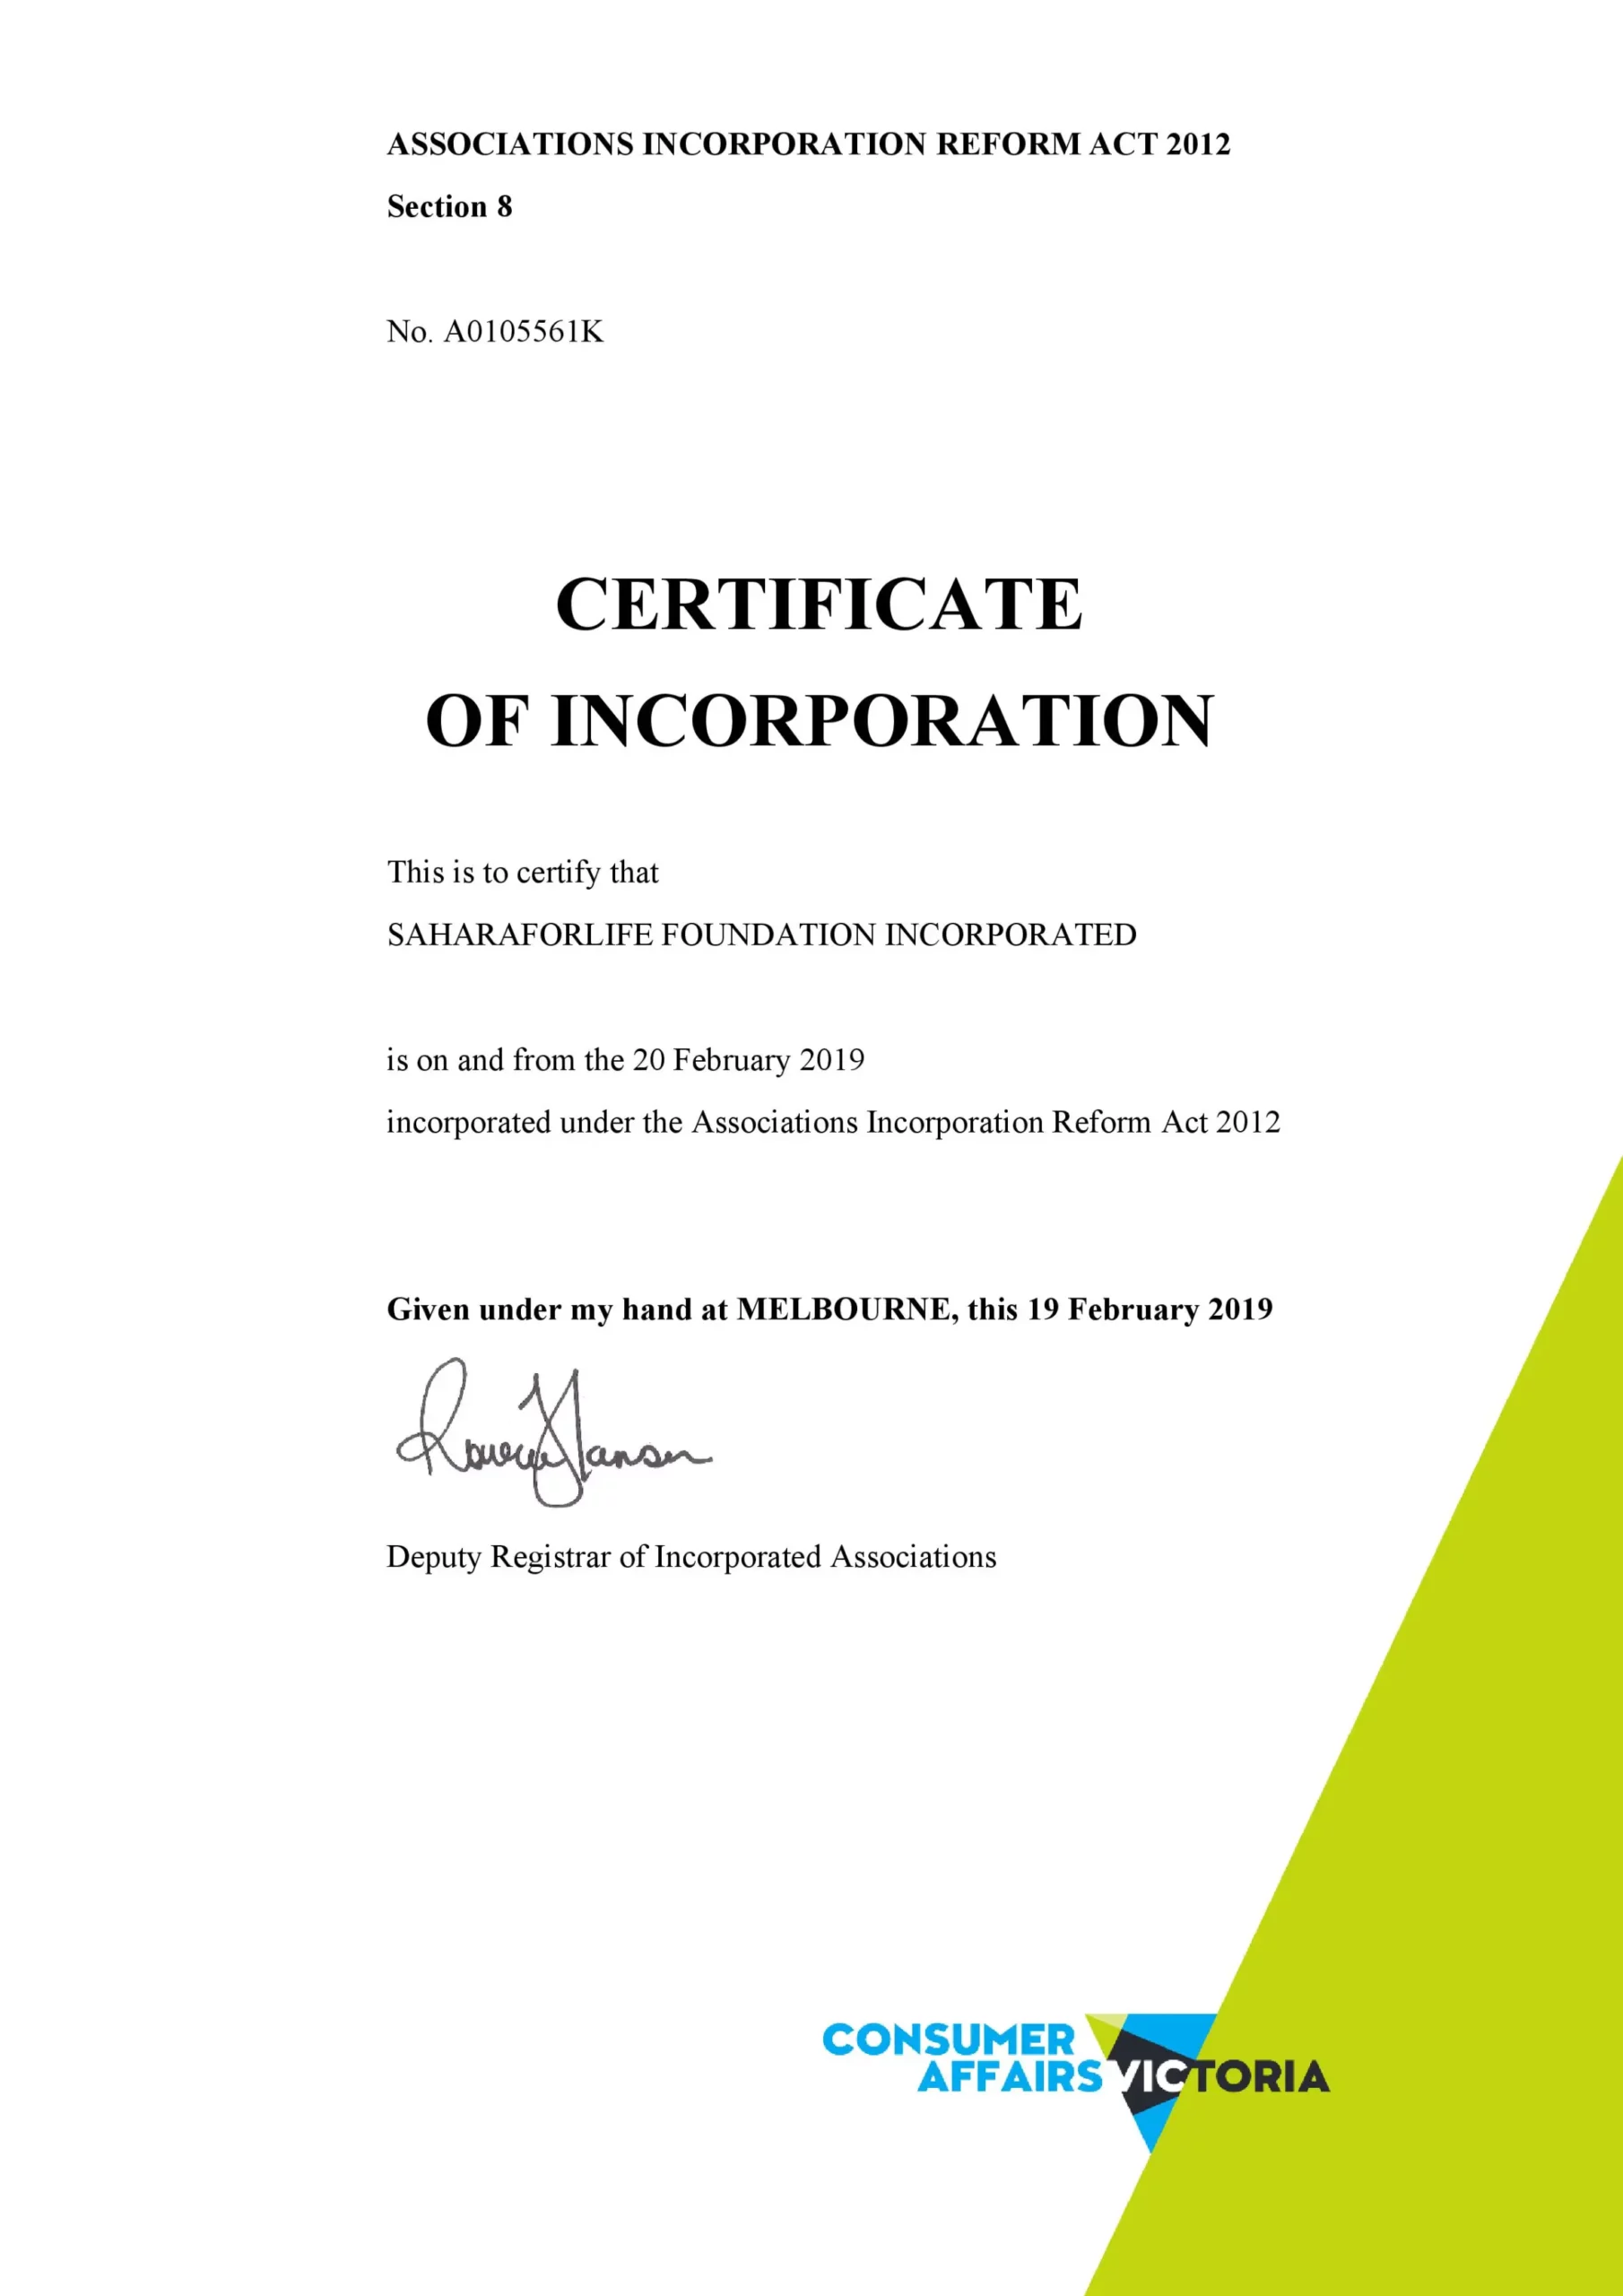 Registration Certificate Australia